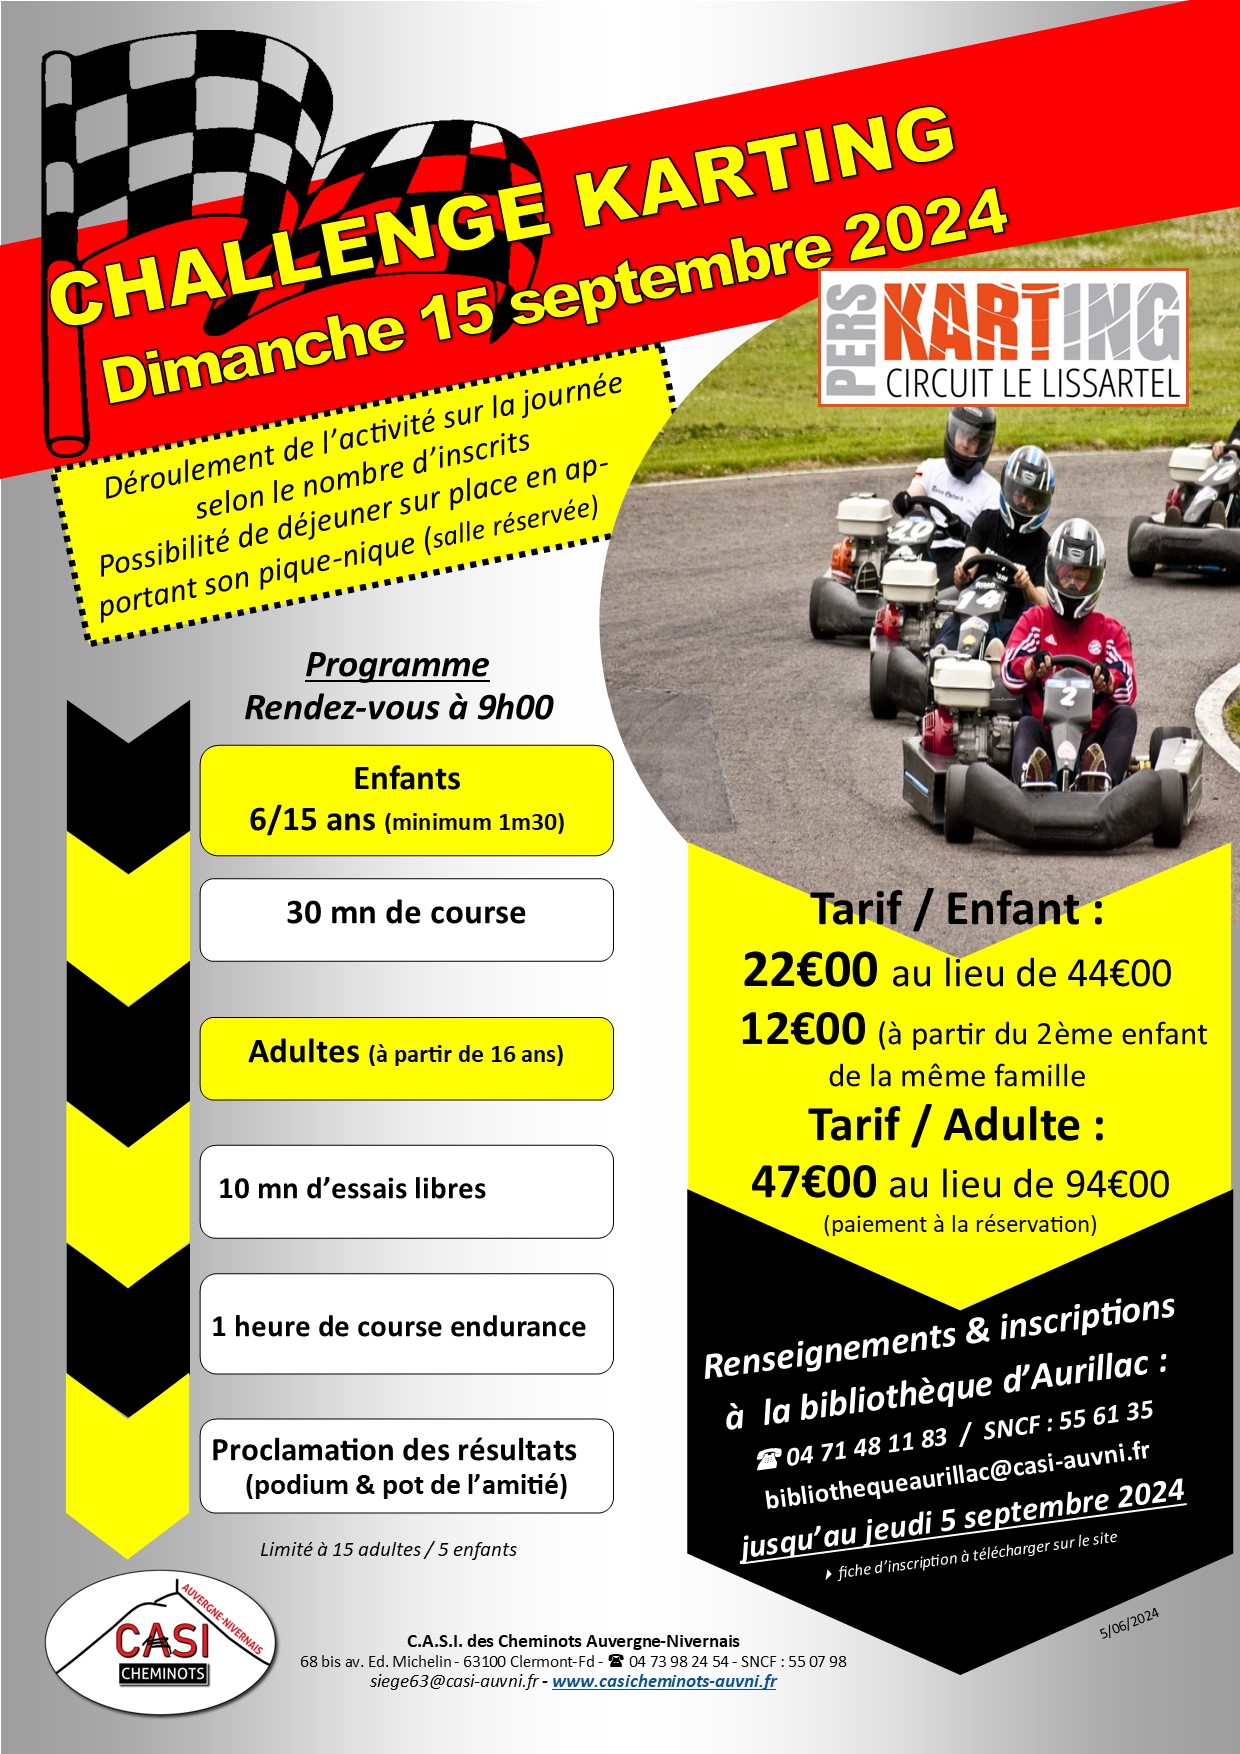 2024 challenge karting Le Lissartel Paers Cantal